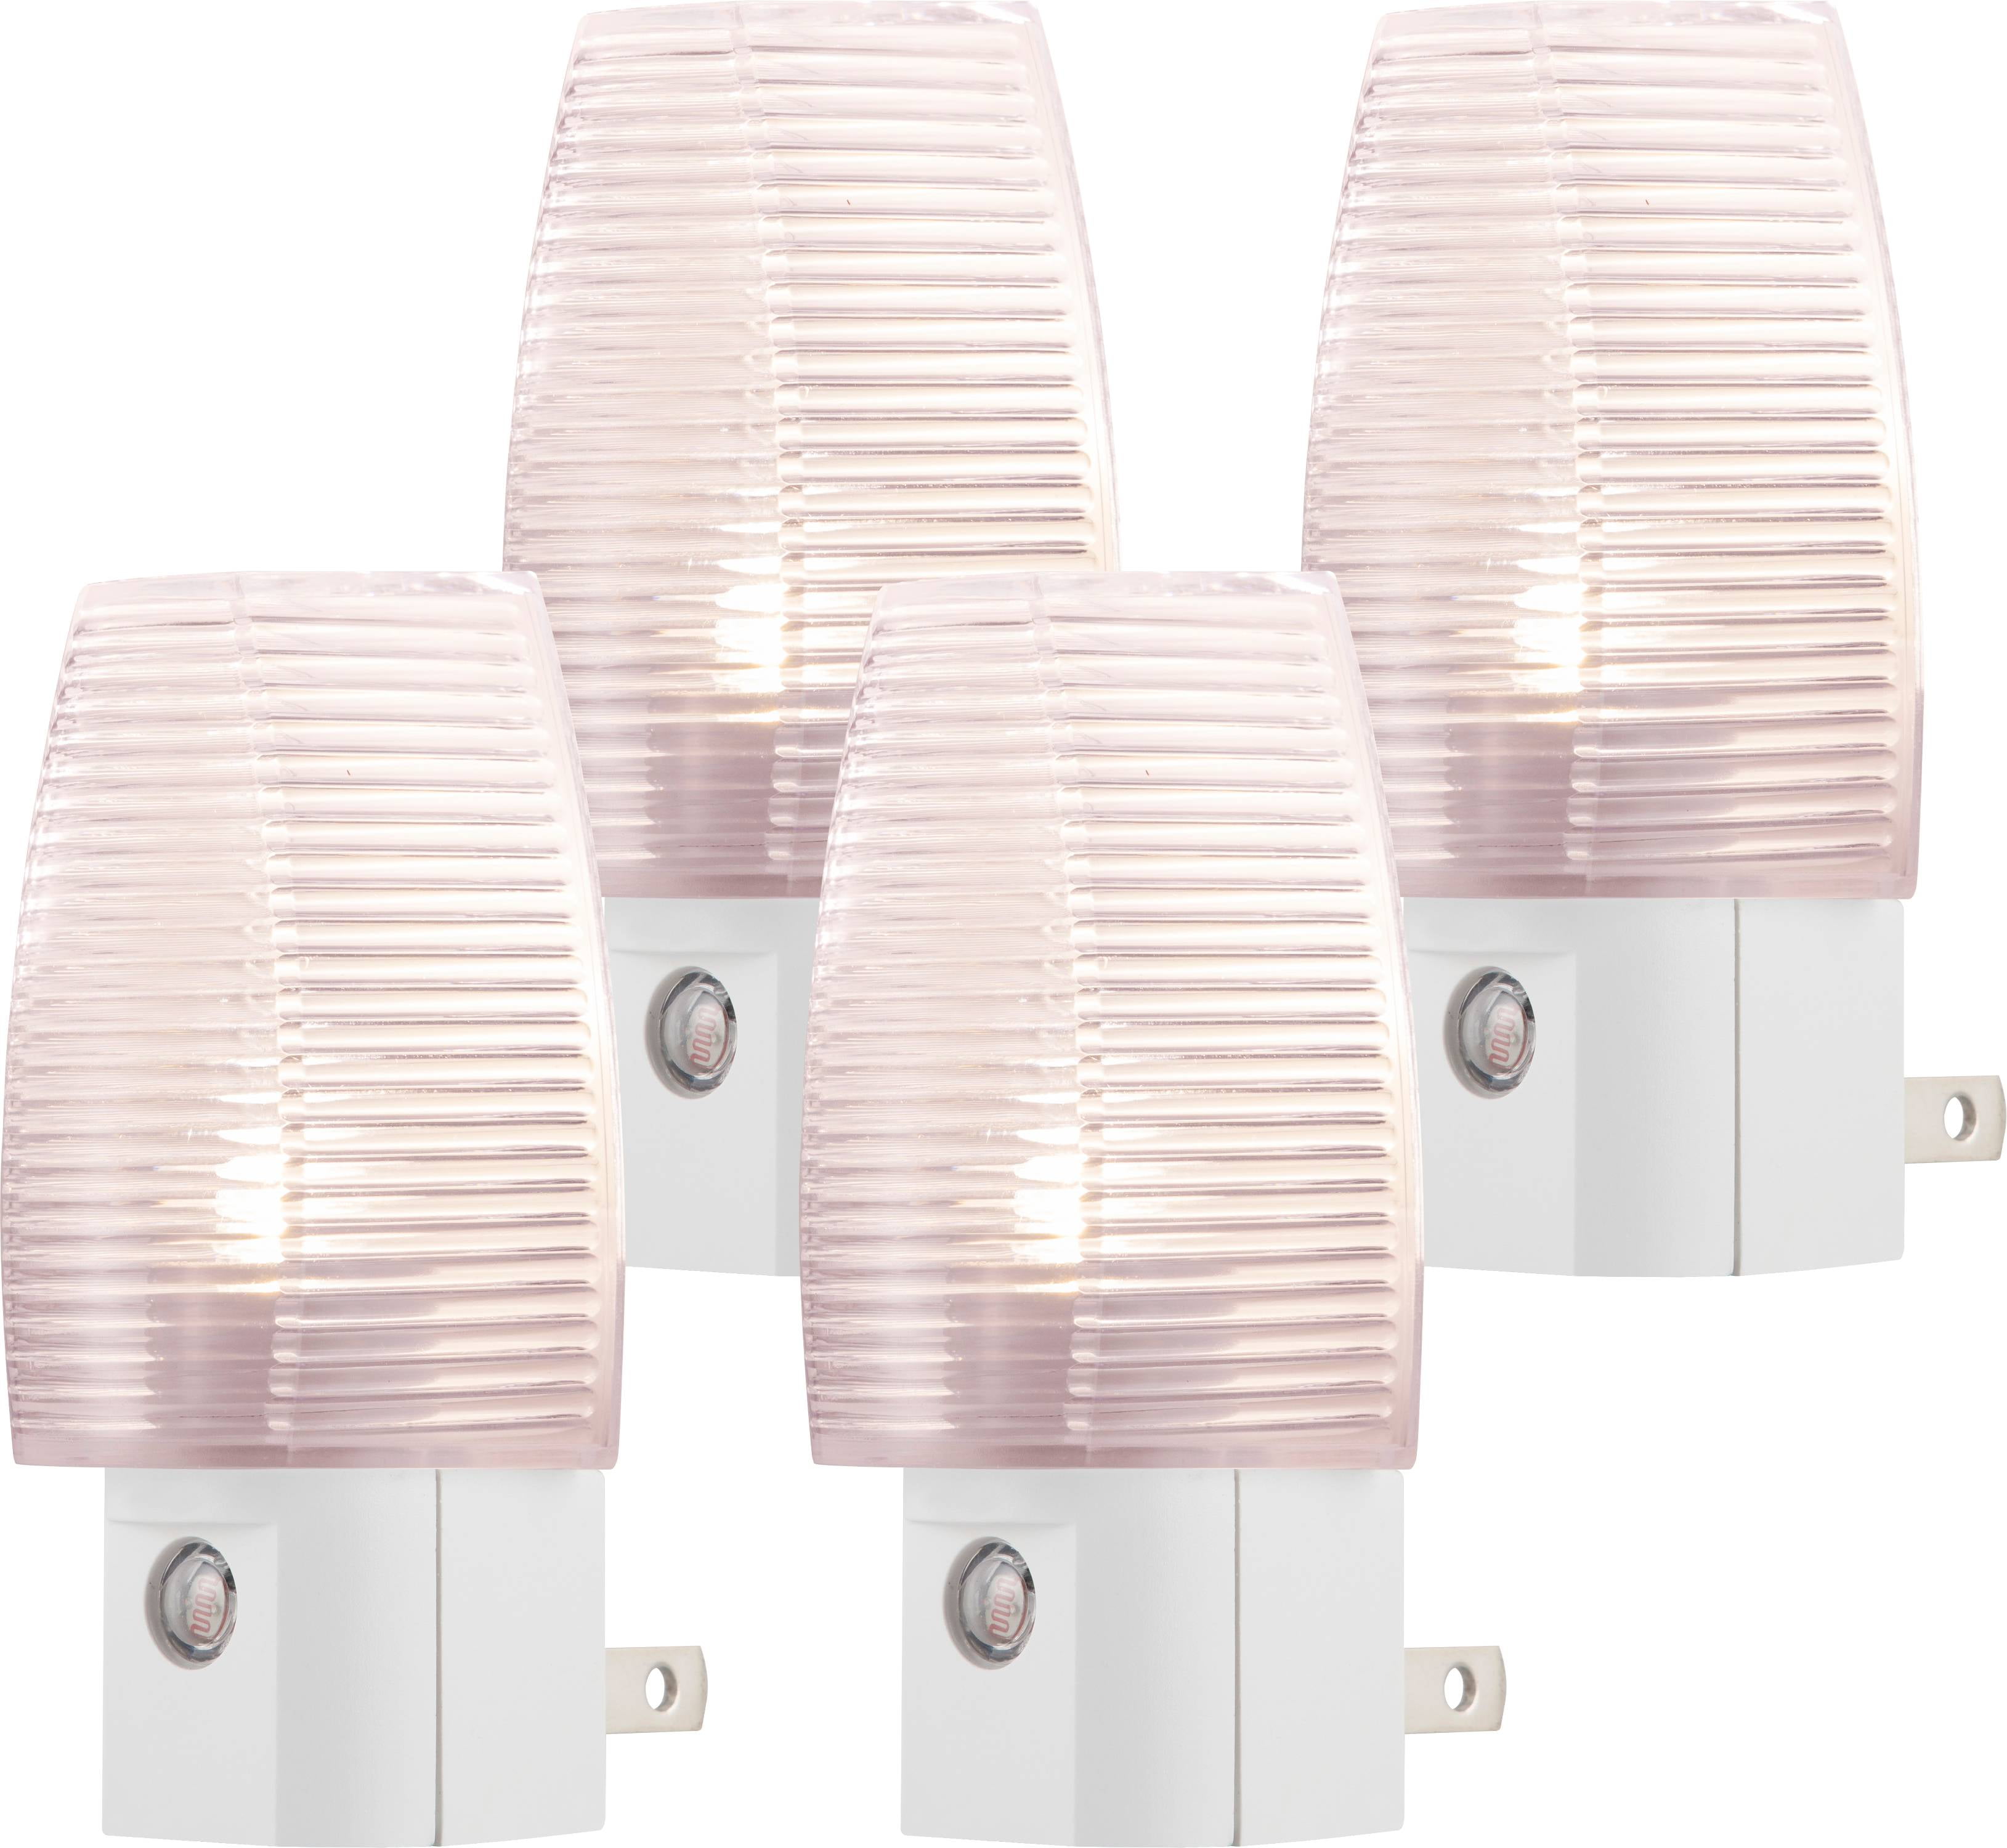 LED Night Light Plug in Lighting Automatic w/ Auto Sensor Lot UL Listed 4 Pack 